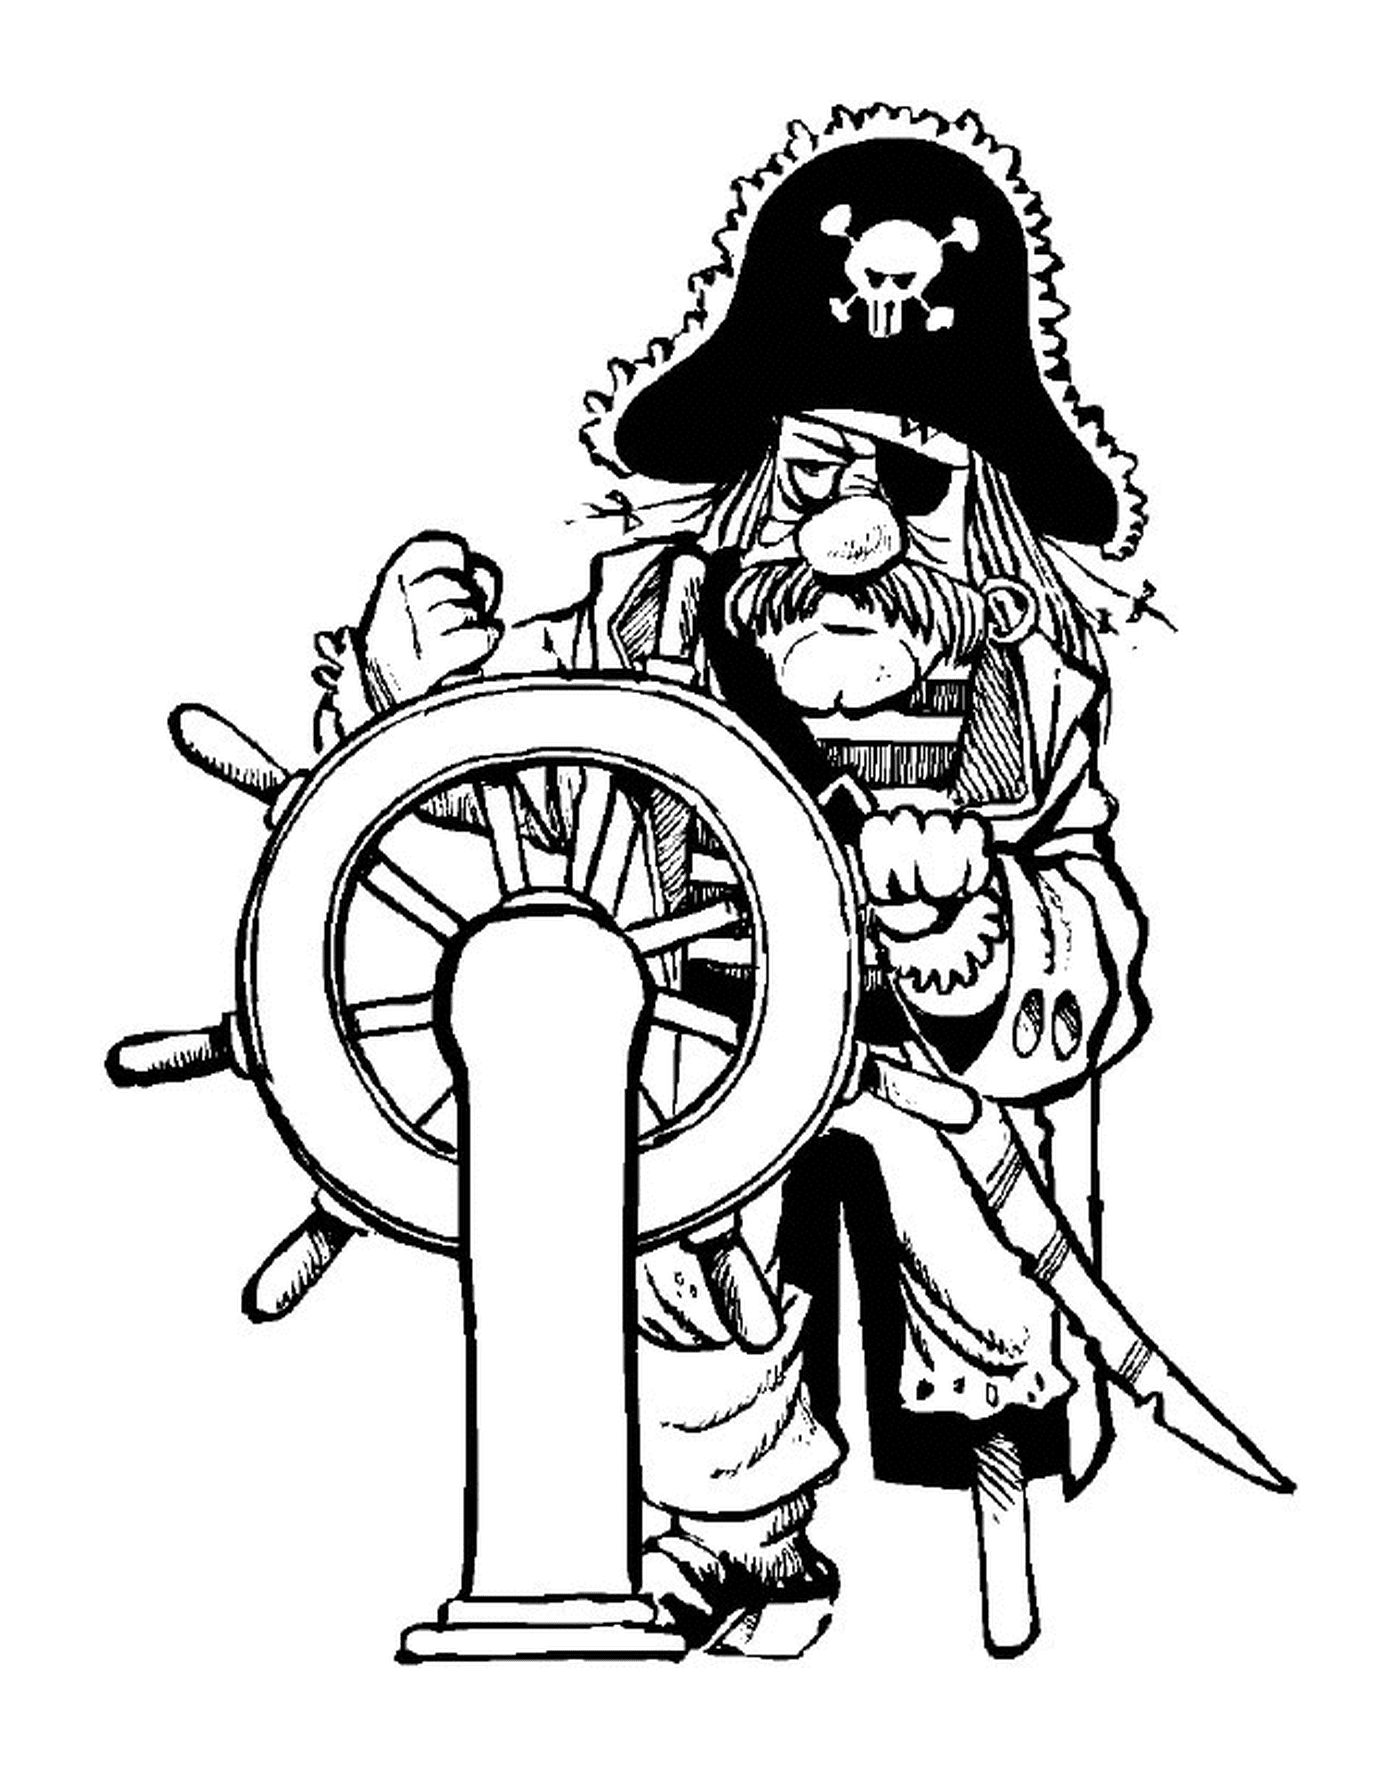   Le capitaine pirate à la barre 